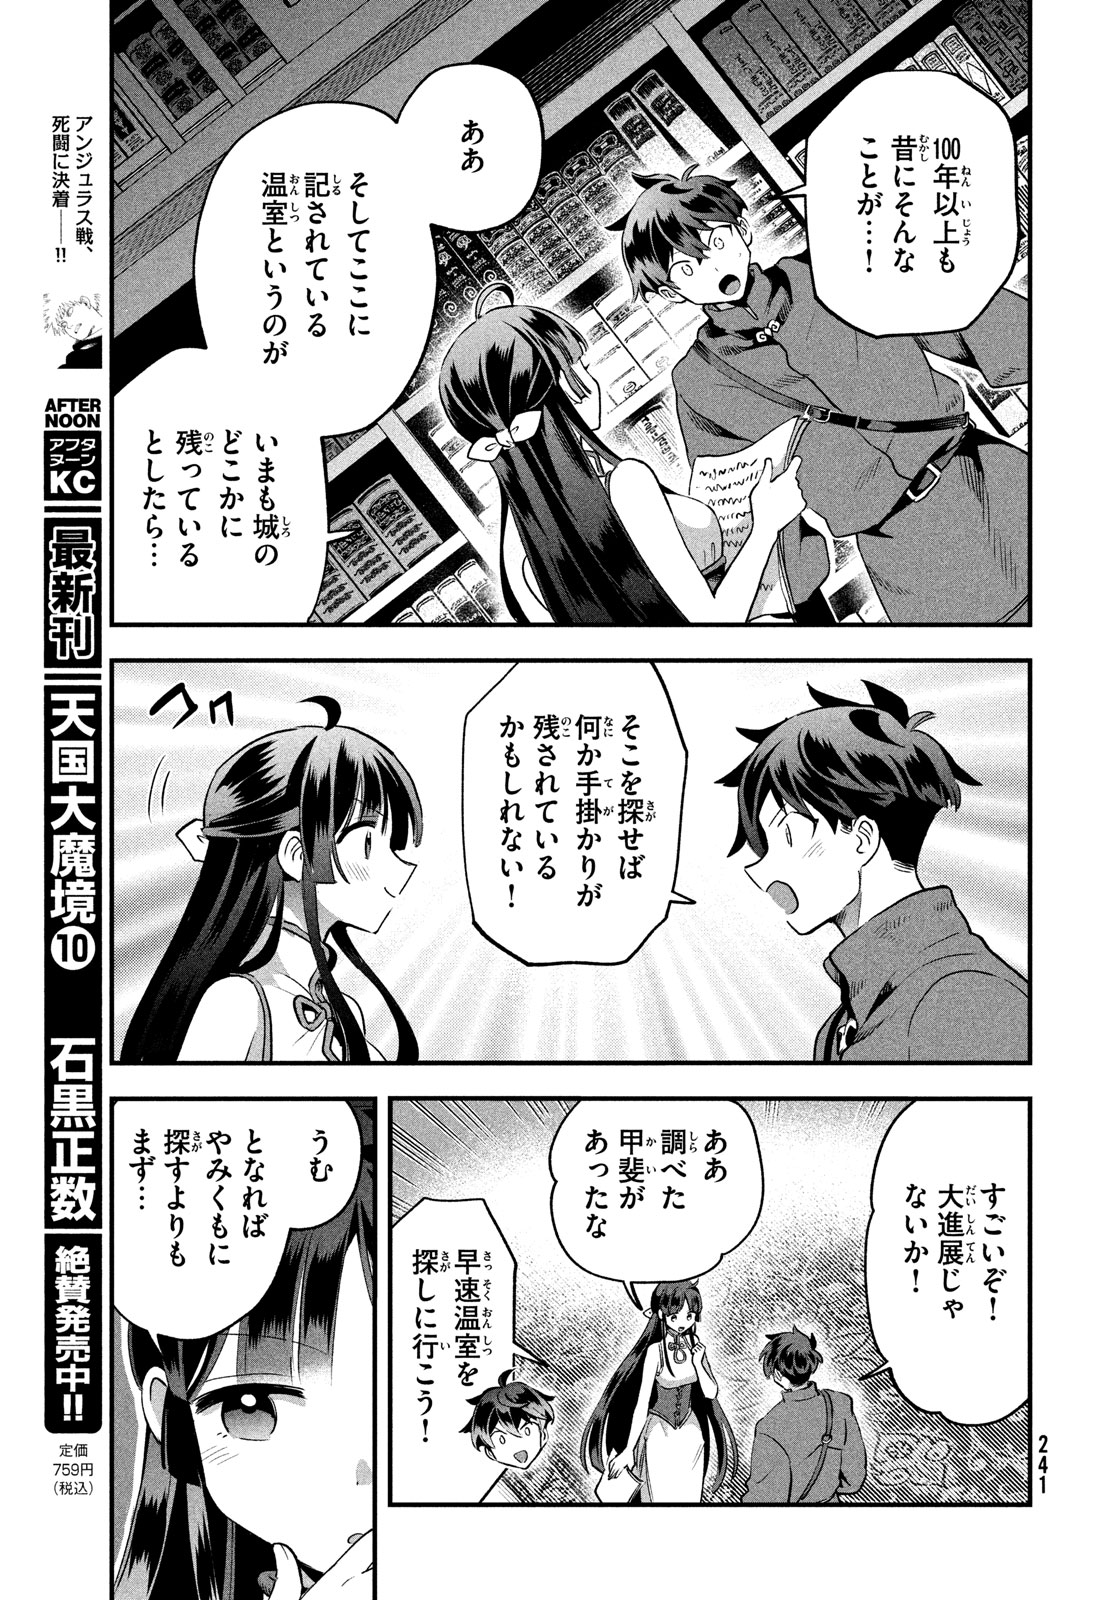 7-nin no Nemuri Hime - Chapter 34 - Page 13